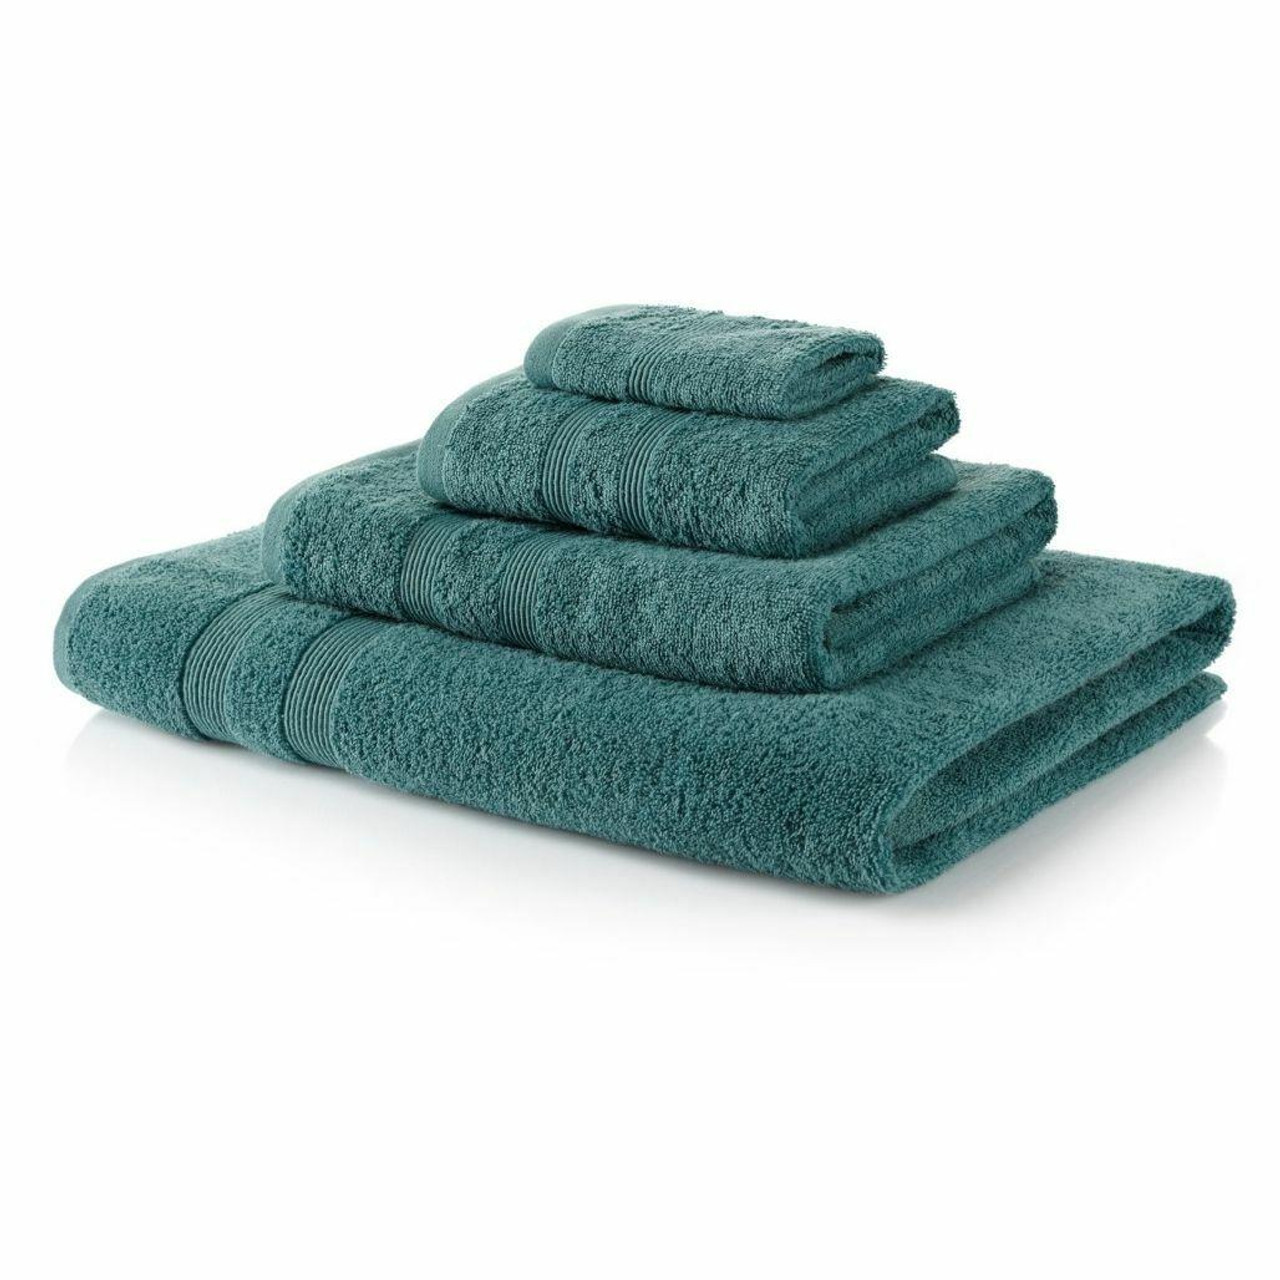 2 Piece Set, Beige Zaras Luxury Towel Set 100% Egyptian Cotton Towel Hand Towel Bath Towel Bath Sheet Towel Bale 500 GSM Bathroom towels 2 to 6 Piece Sets. 